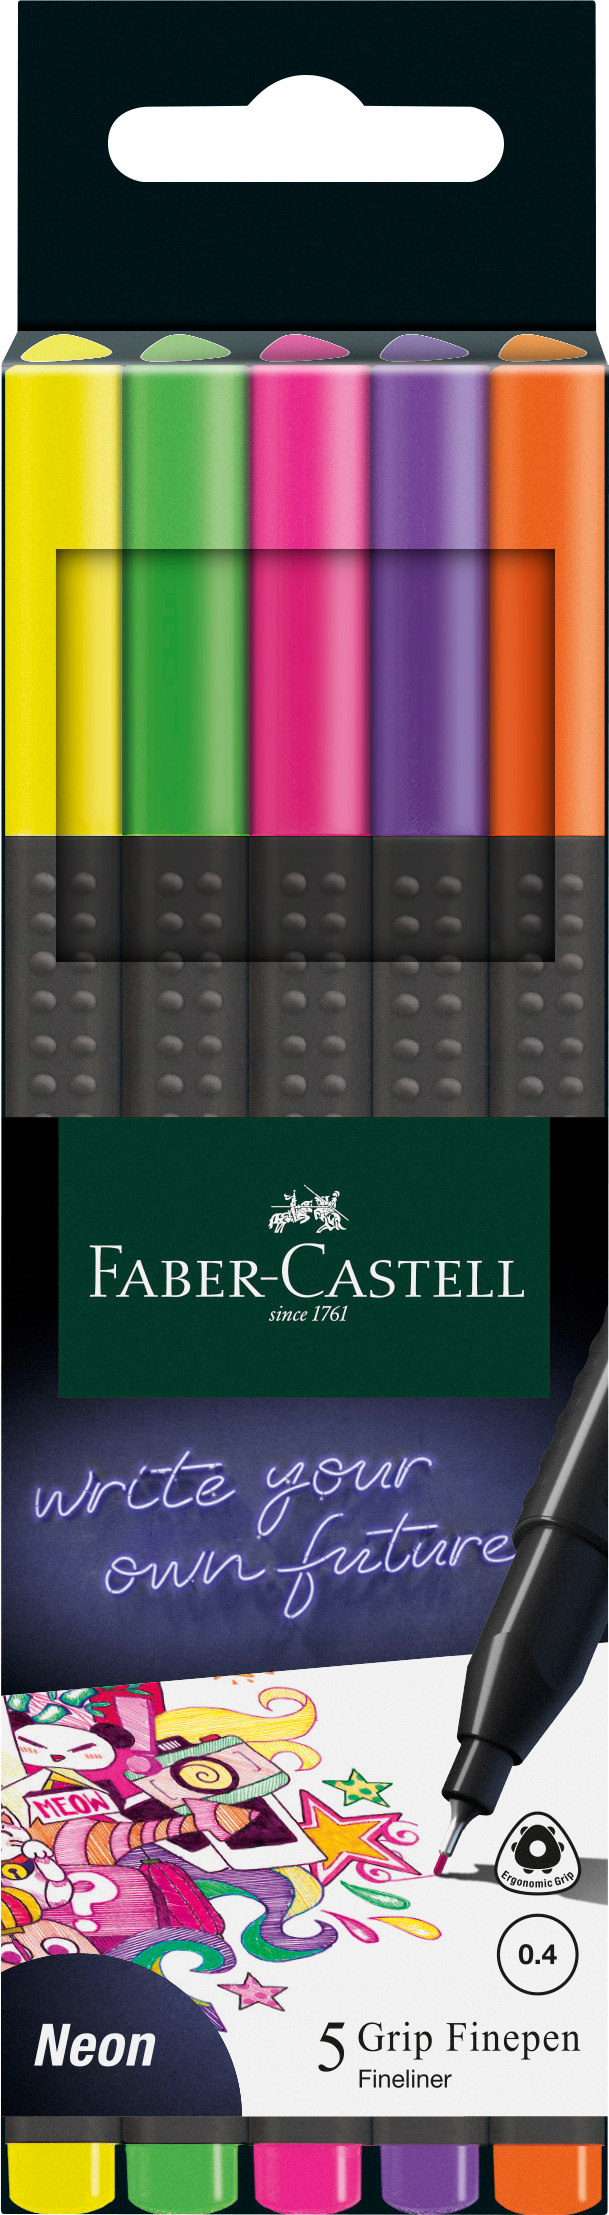 FABER-CASTELL Finepen Grip 0.4mm 151603 5 couleurs, neon